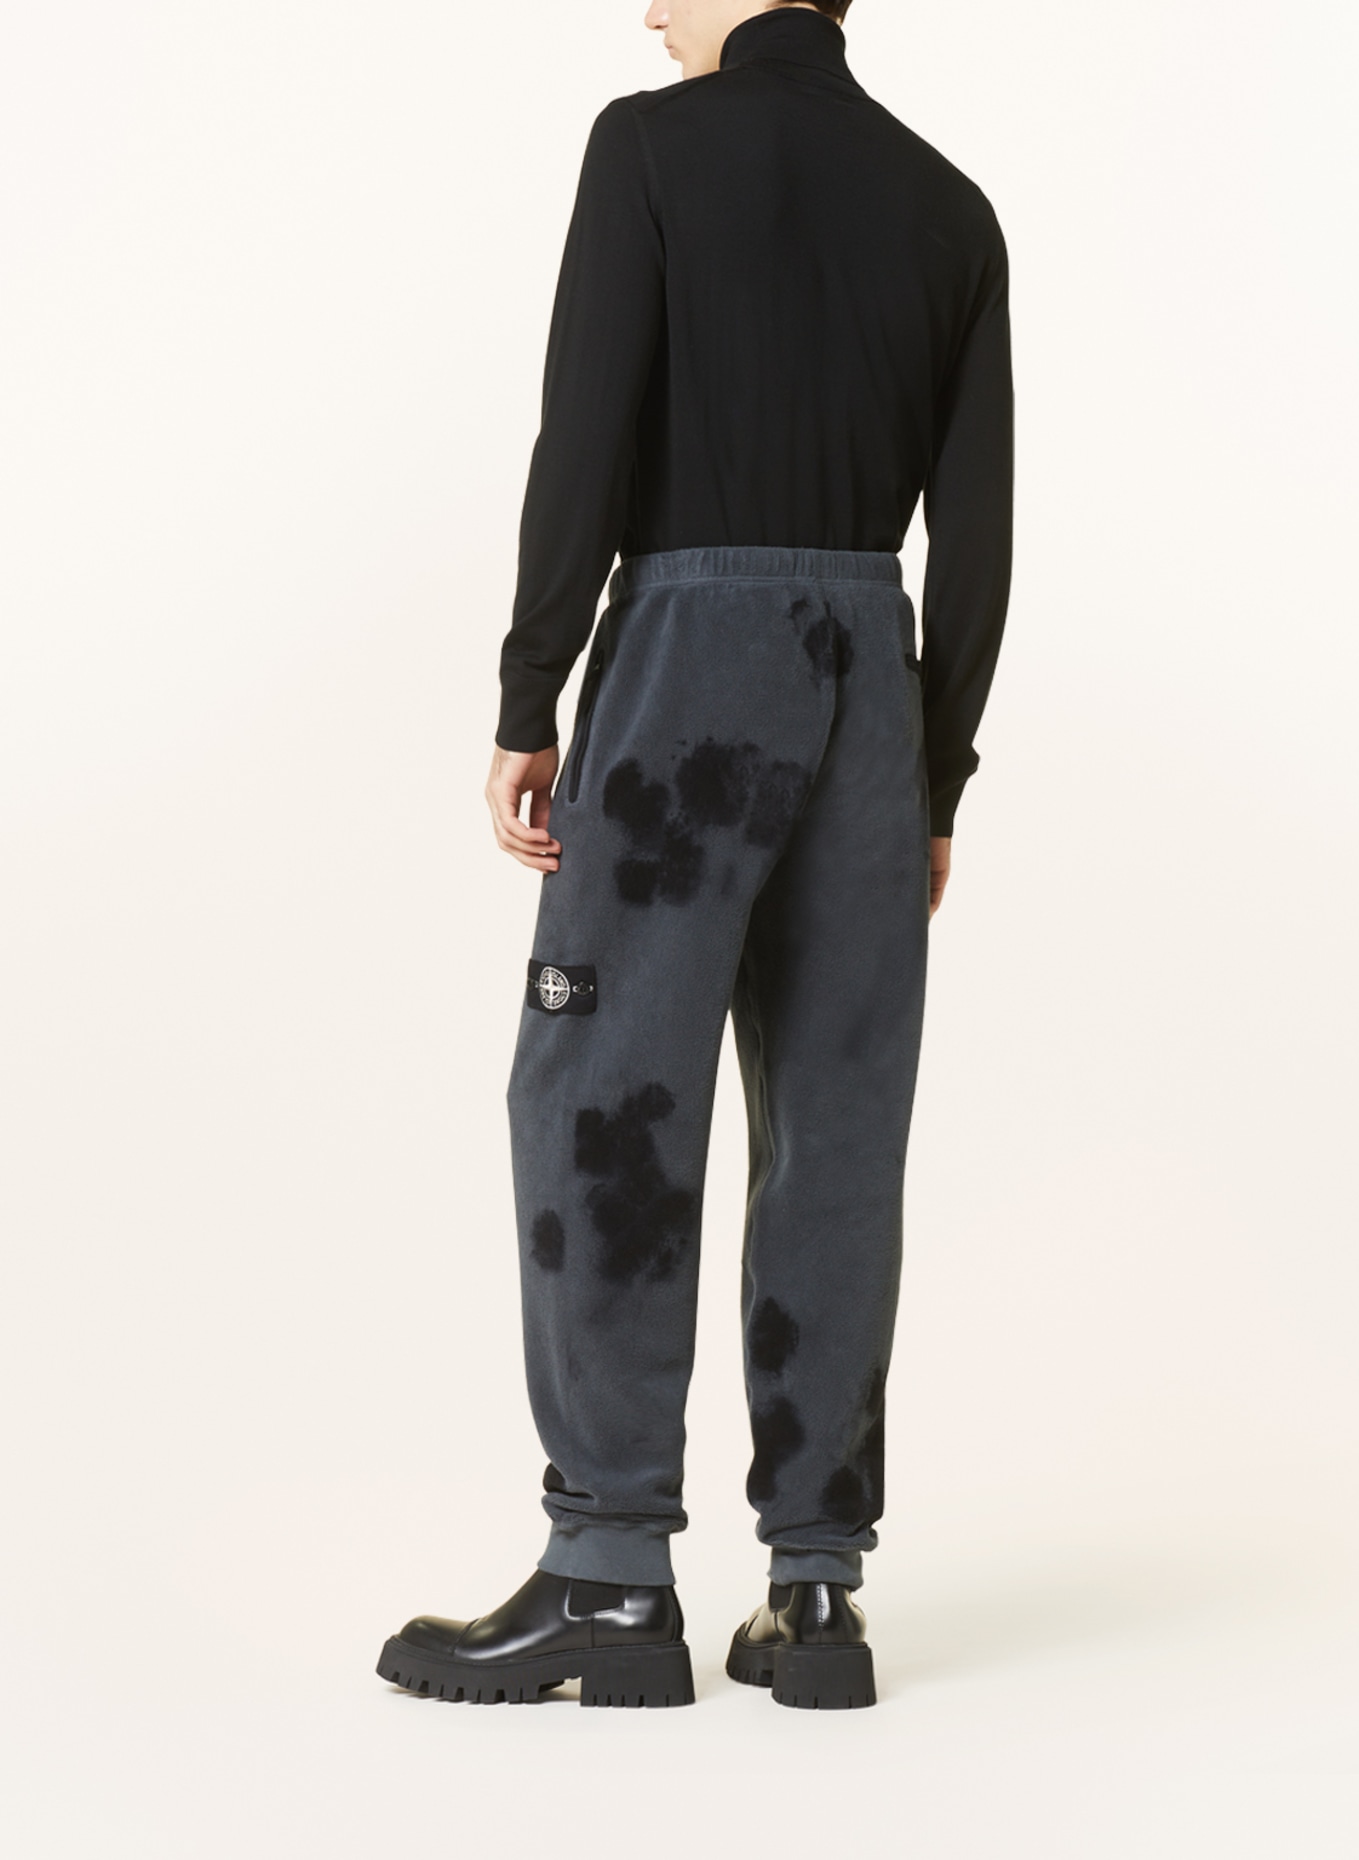 STONE ISLAND Fleece pants in jogger style, Color: DARK GRAY/ BLACK (Image 3)